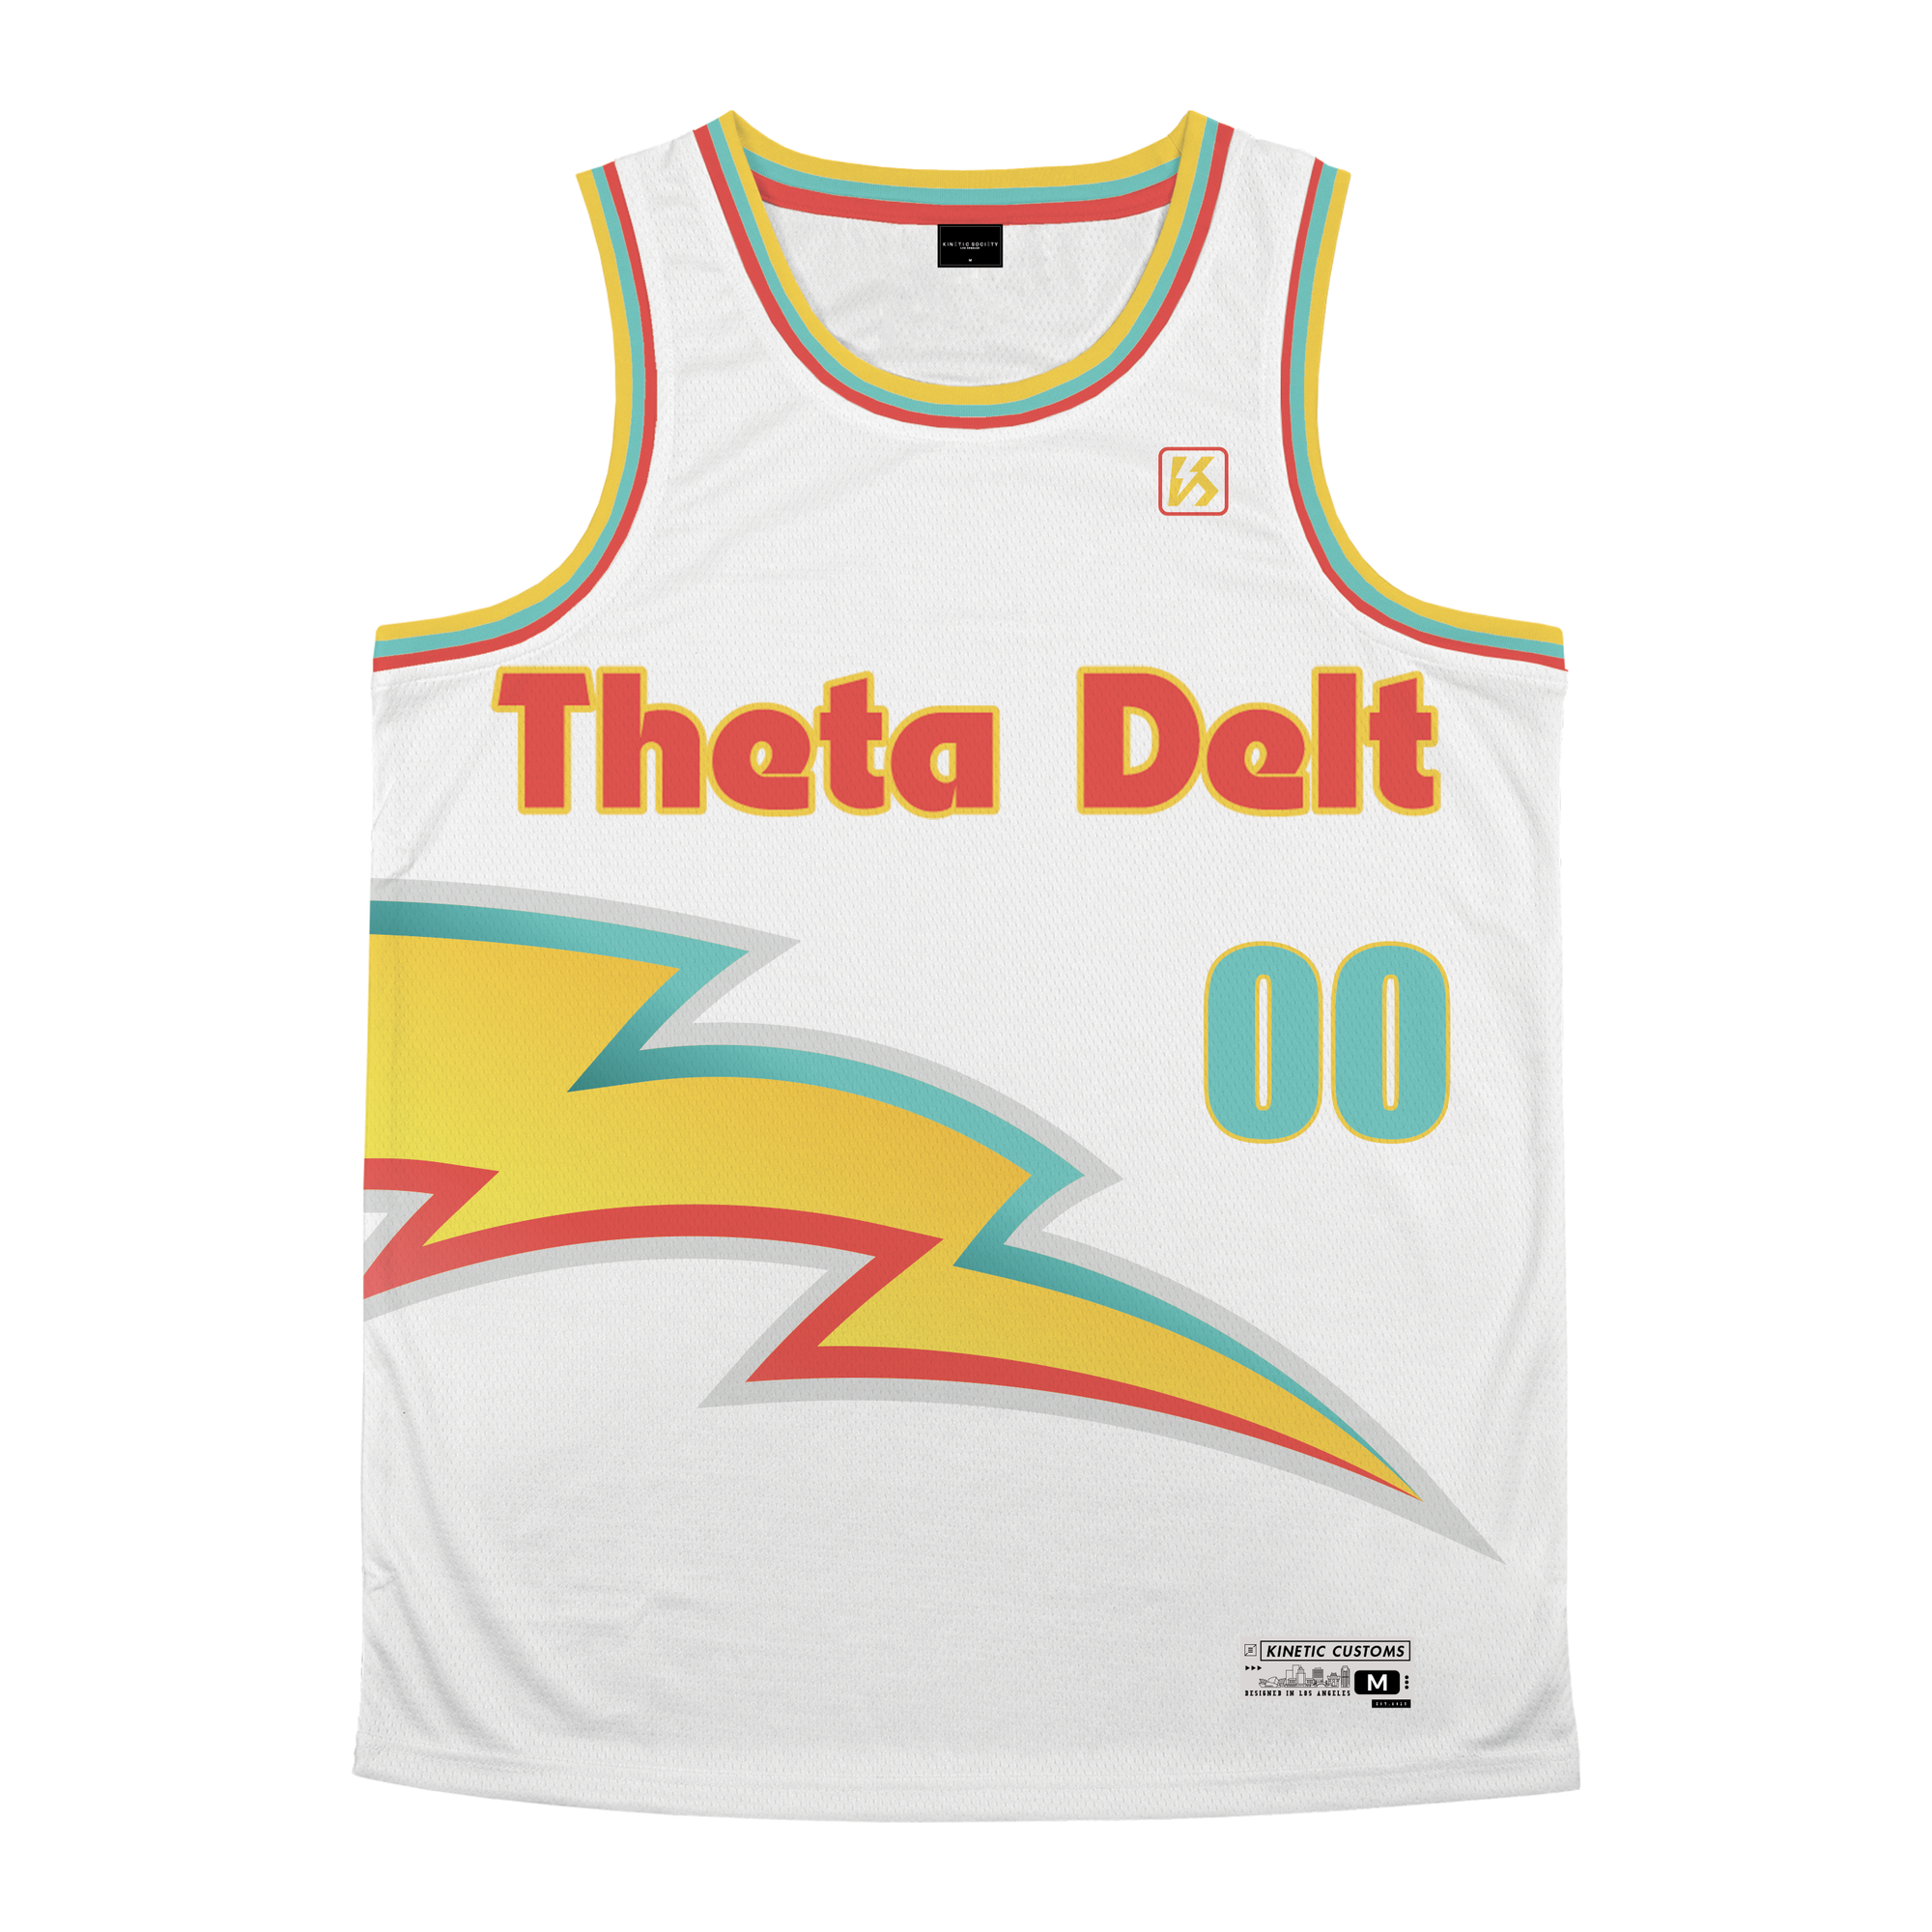 Theta Delta Chi - Bolt Basketball Jersey